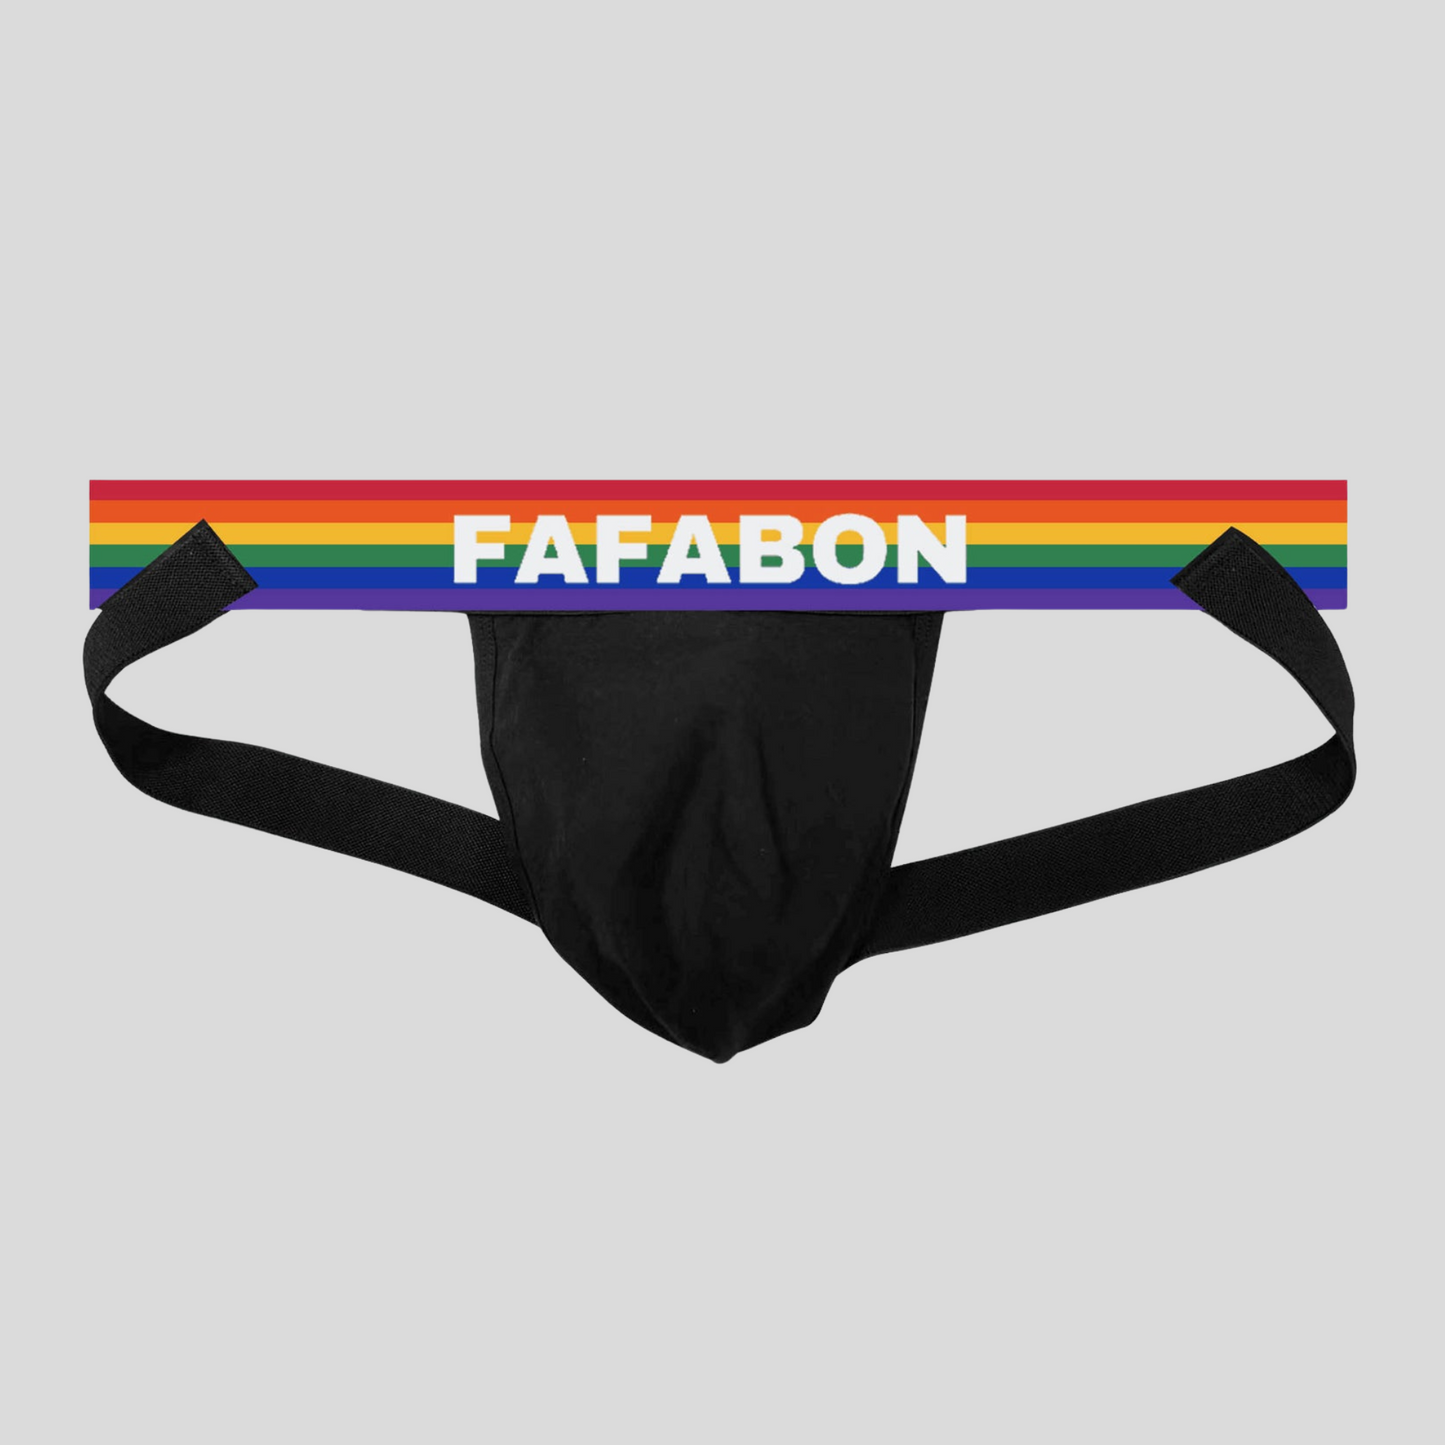 RAINBEAU Jock | Black cotton pouch with 'FAFABON' logo on rainbow waistband